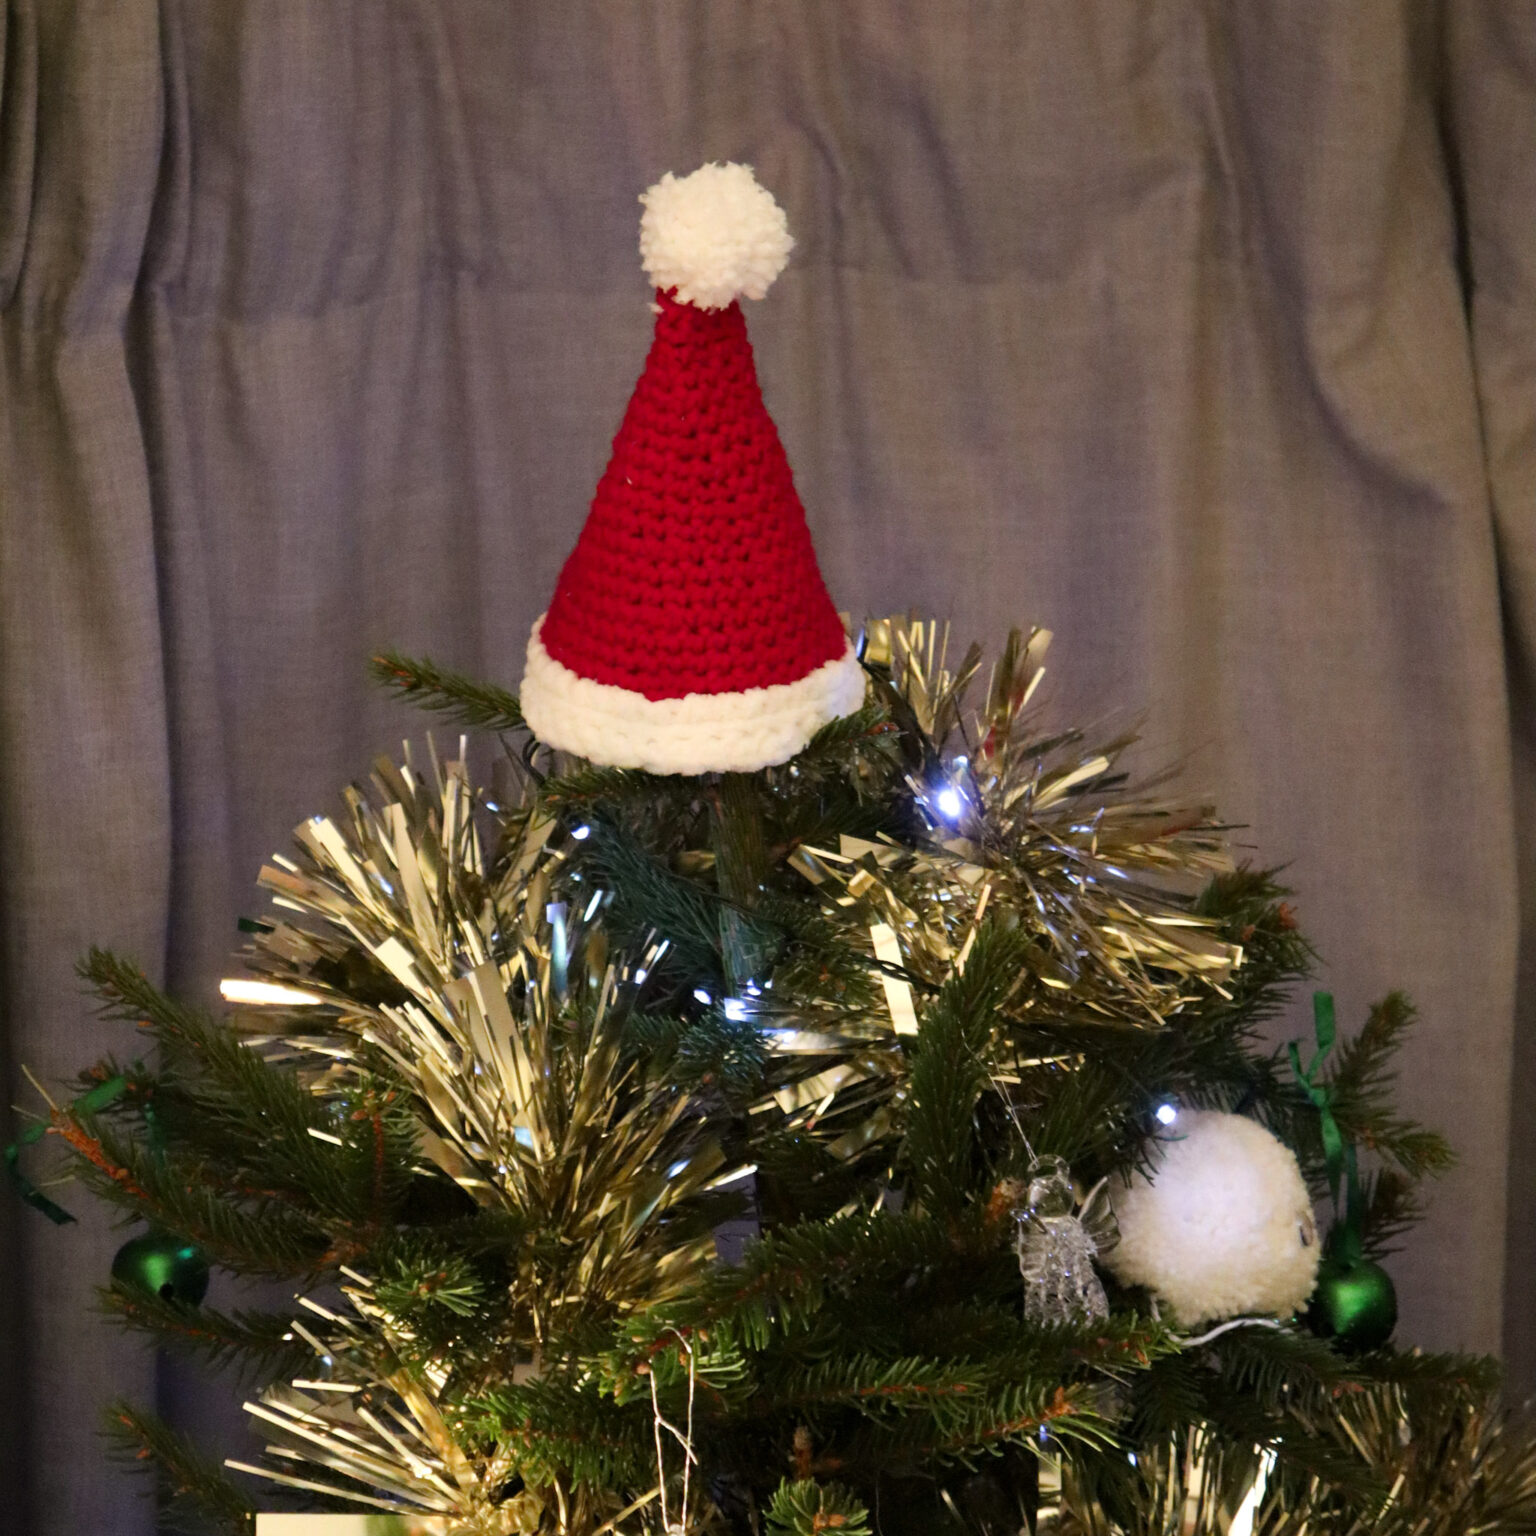 A close up of a crochet Santa Hat Christmas Tree topper.